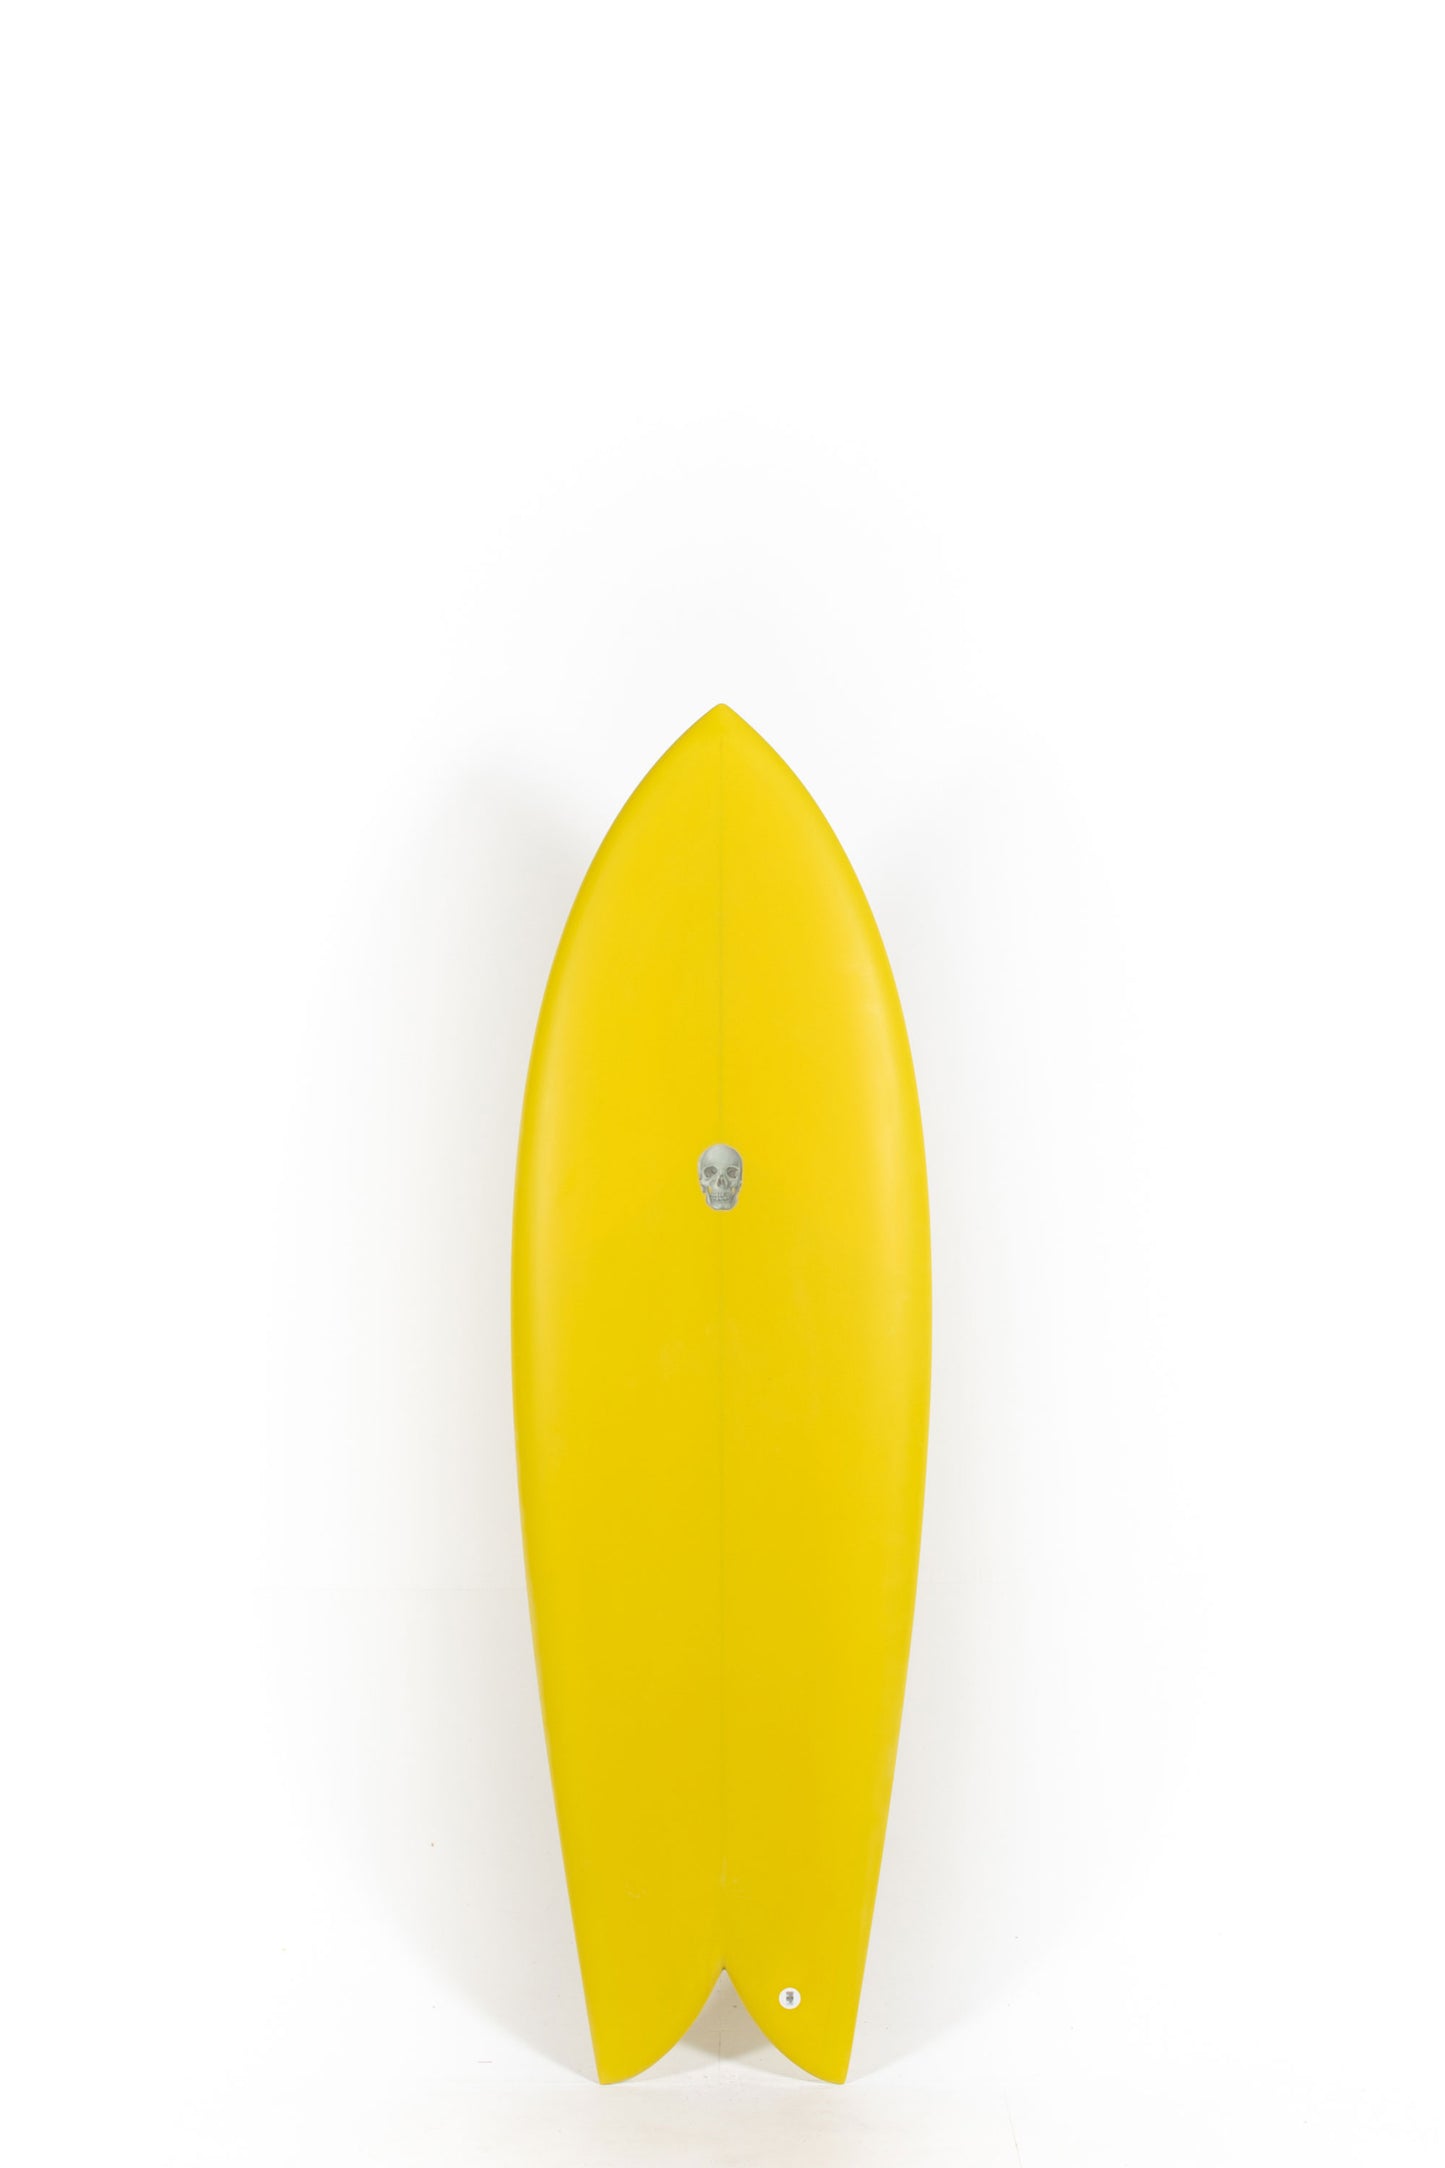 Pukas Surf Shop - Christenson Surfboards - CHRIS FISH - 5'10" x 21 1/2 x 2 9/16 - 